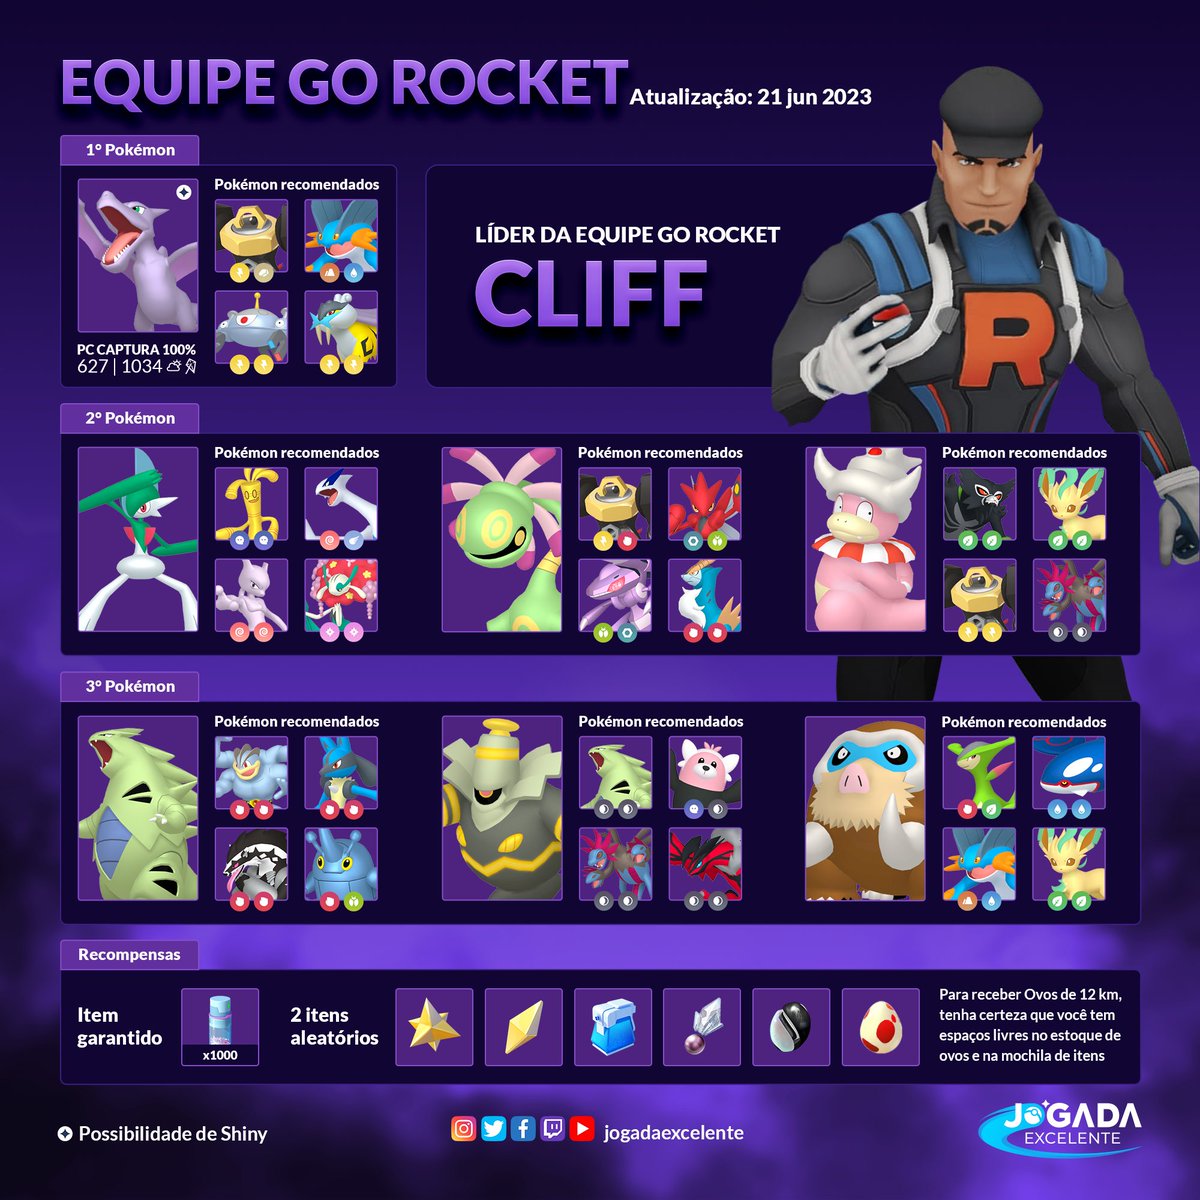 Pokémon GO: como derrotar o líder da Equipe Go Rocket Cliff